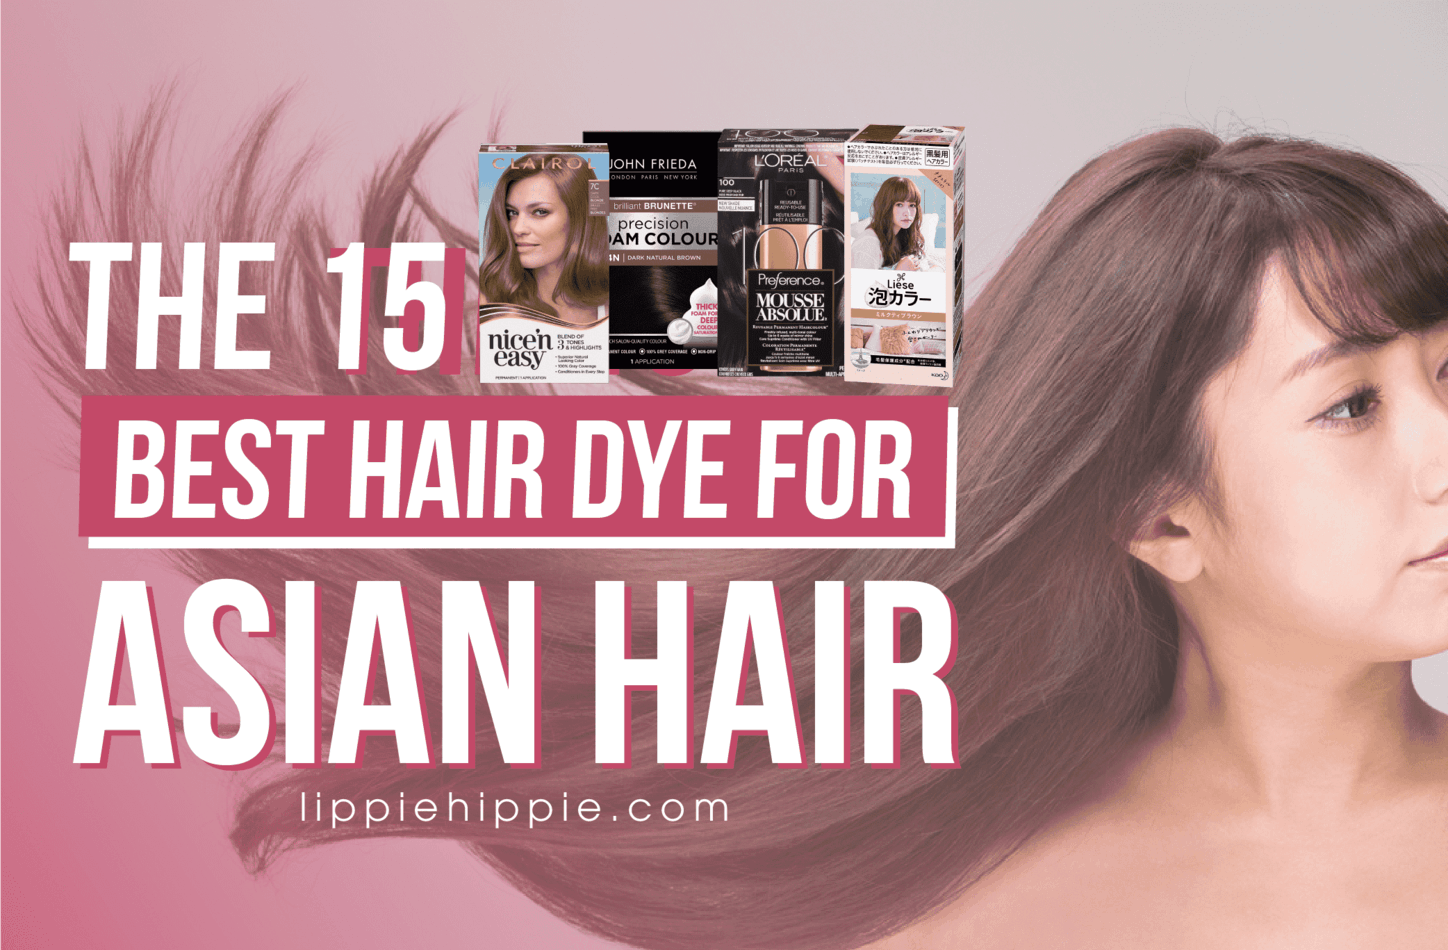 The 15 Best Hair Dye for Asian Hair